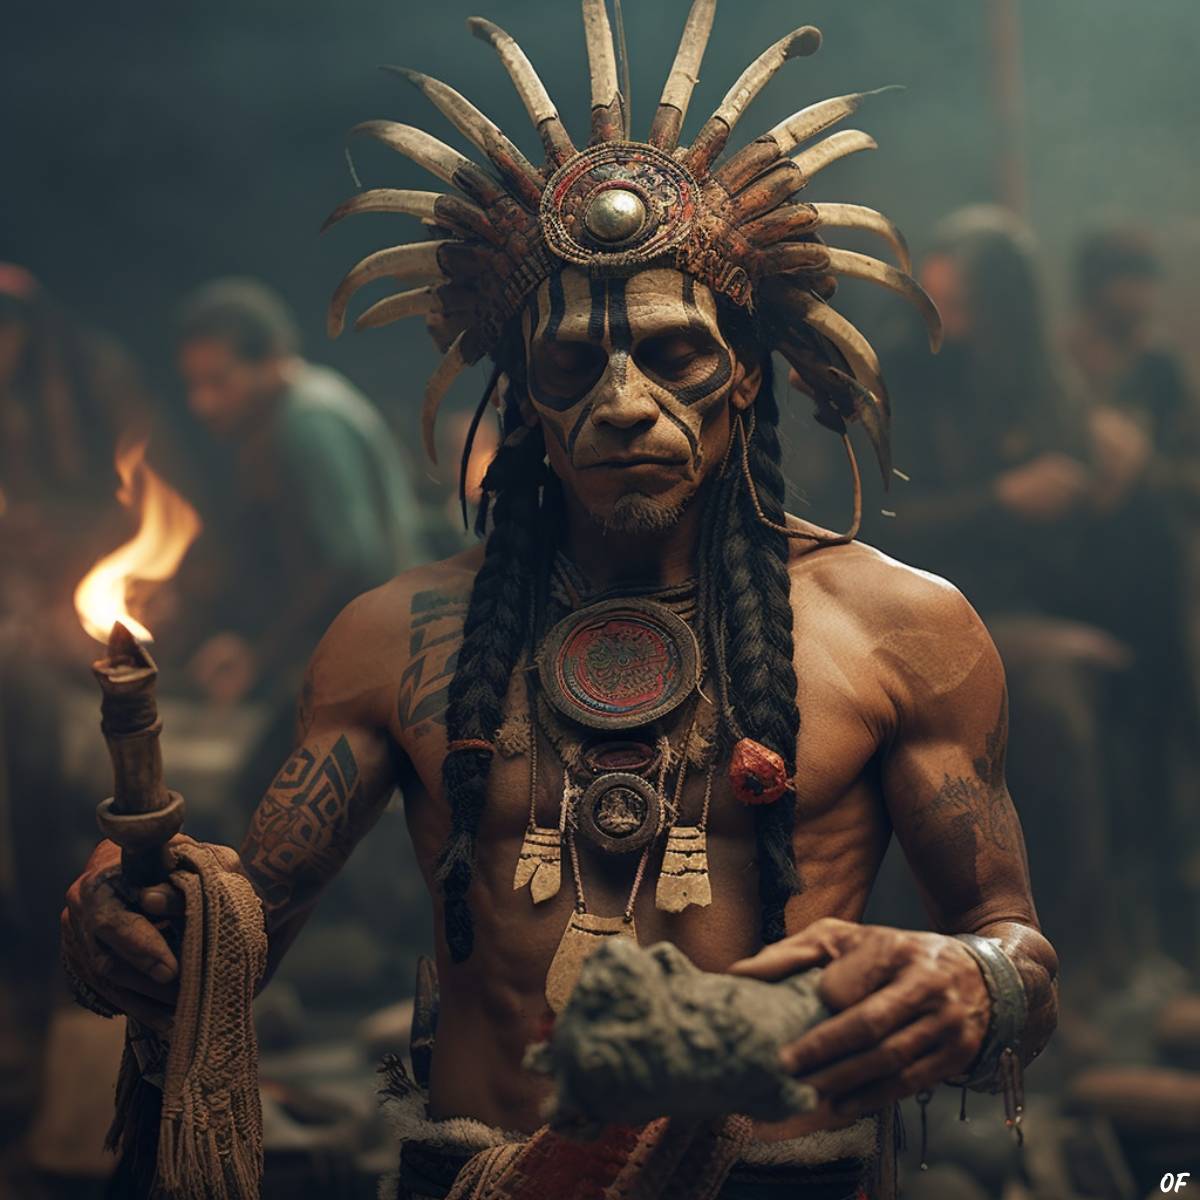 An Aztec Warrior performing ancient rites during a ritual sacrifice.